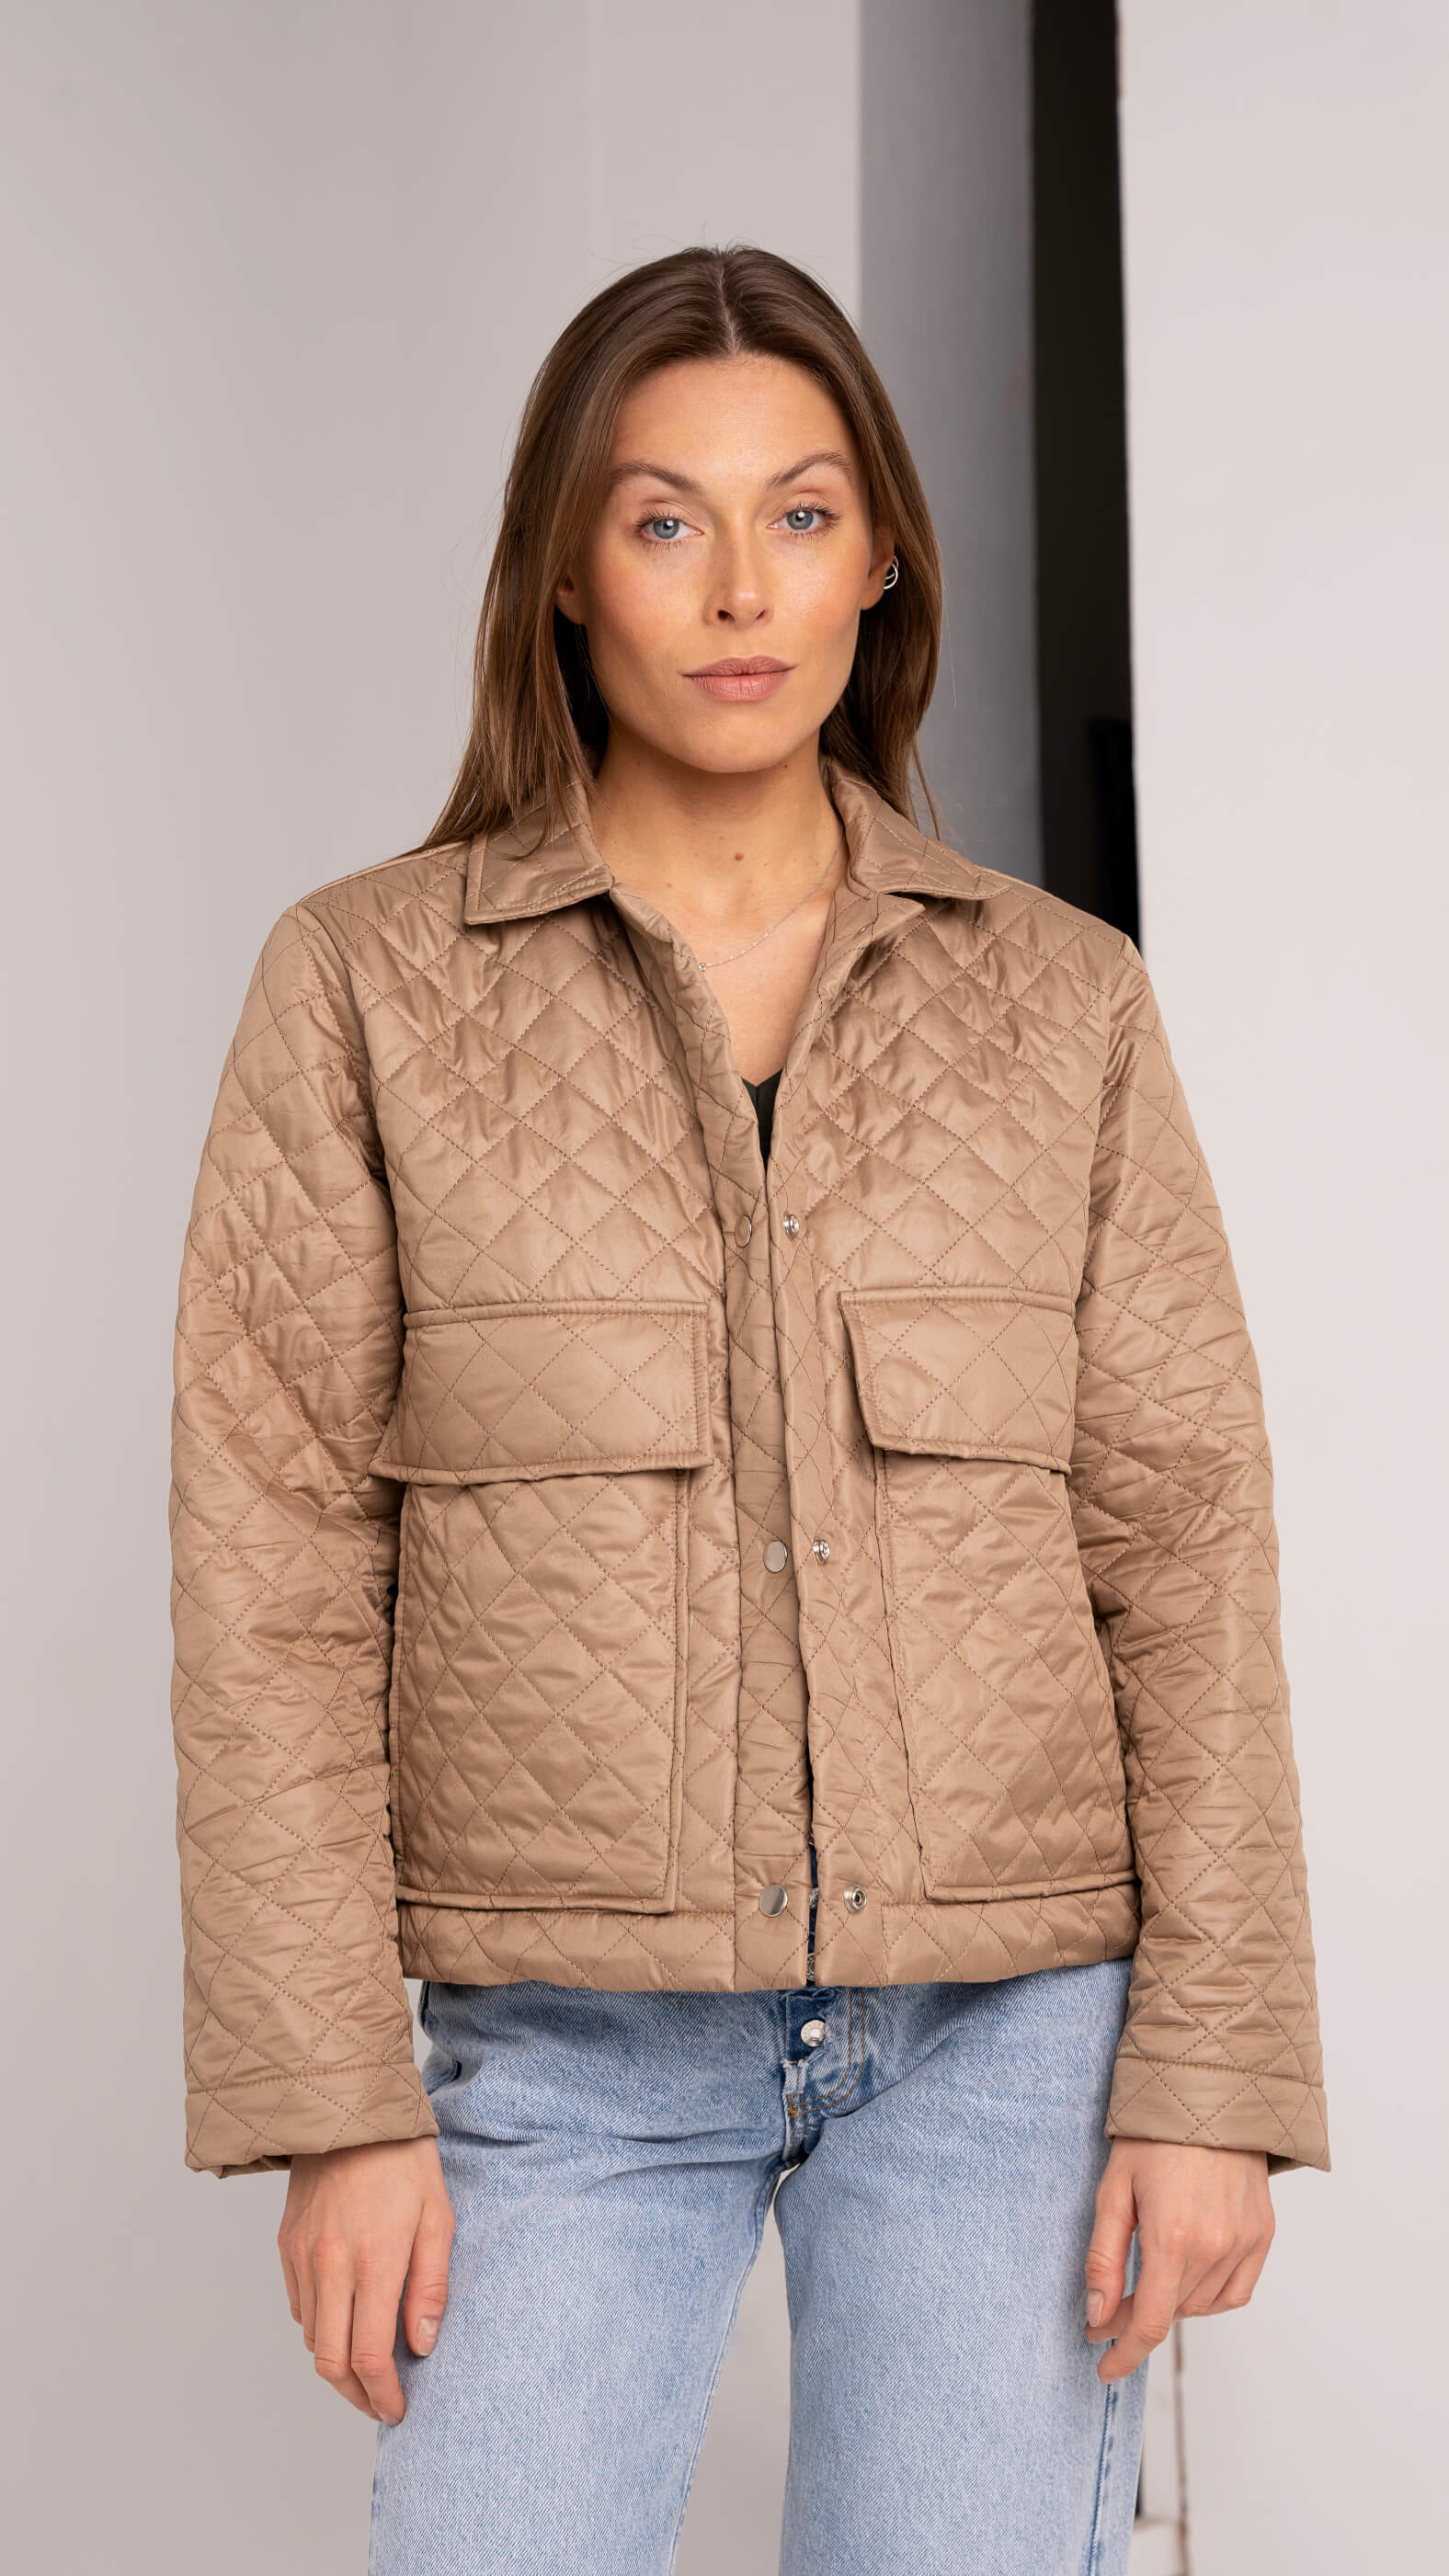 Women's jacket "Ruta" CMF344